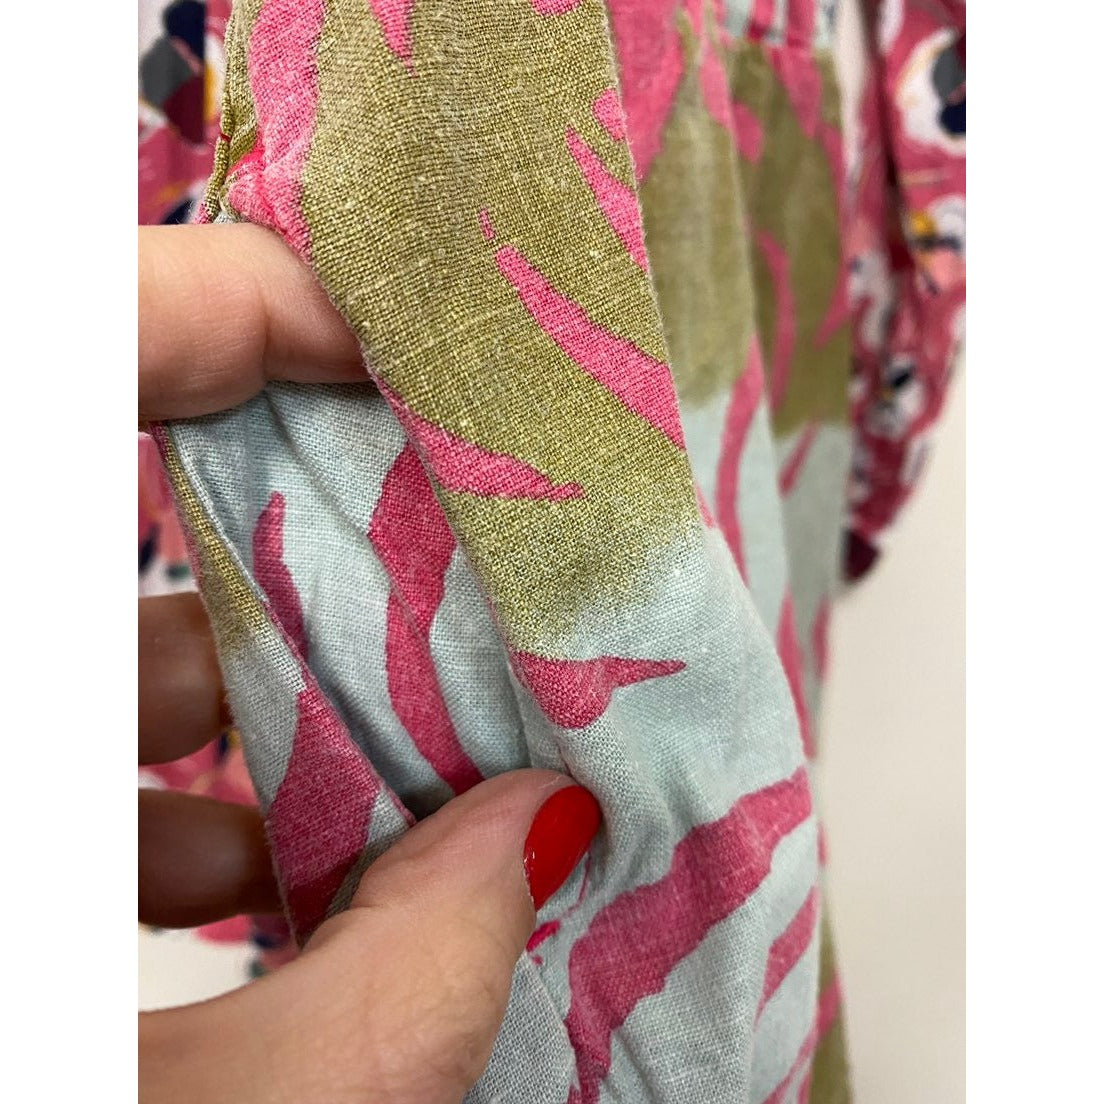 Size 5 Tea collection batik halter Dress